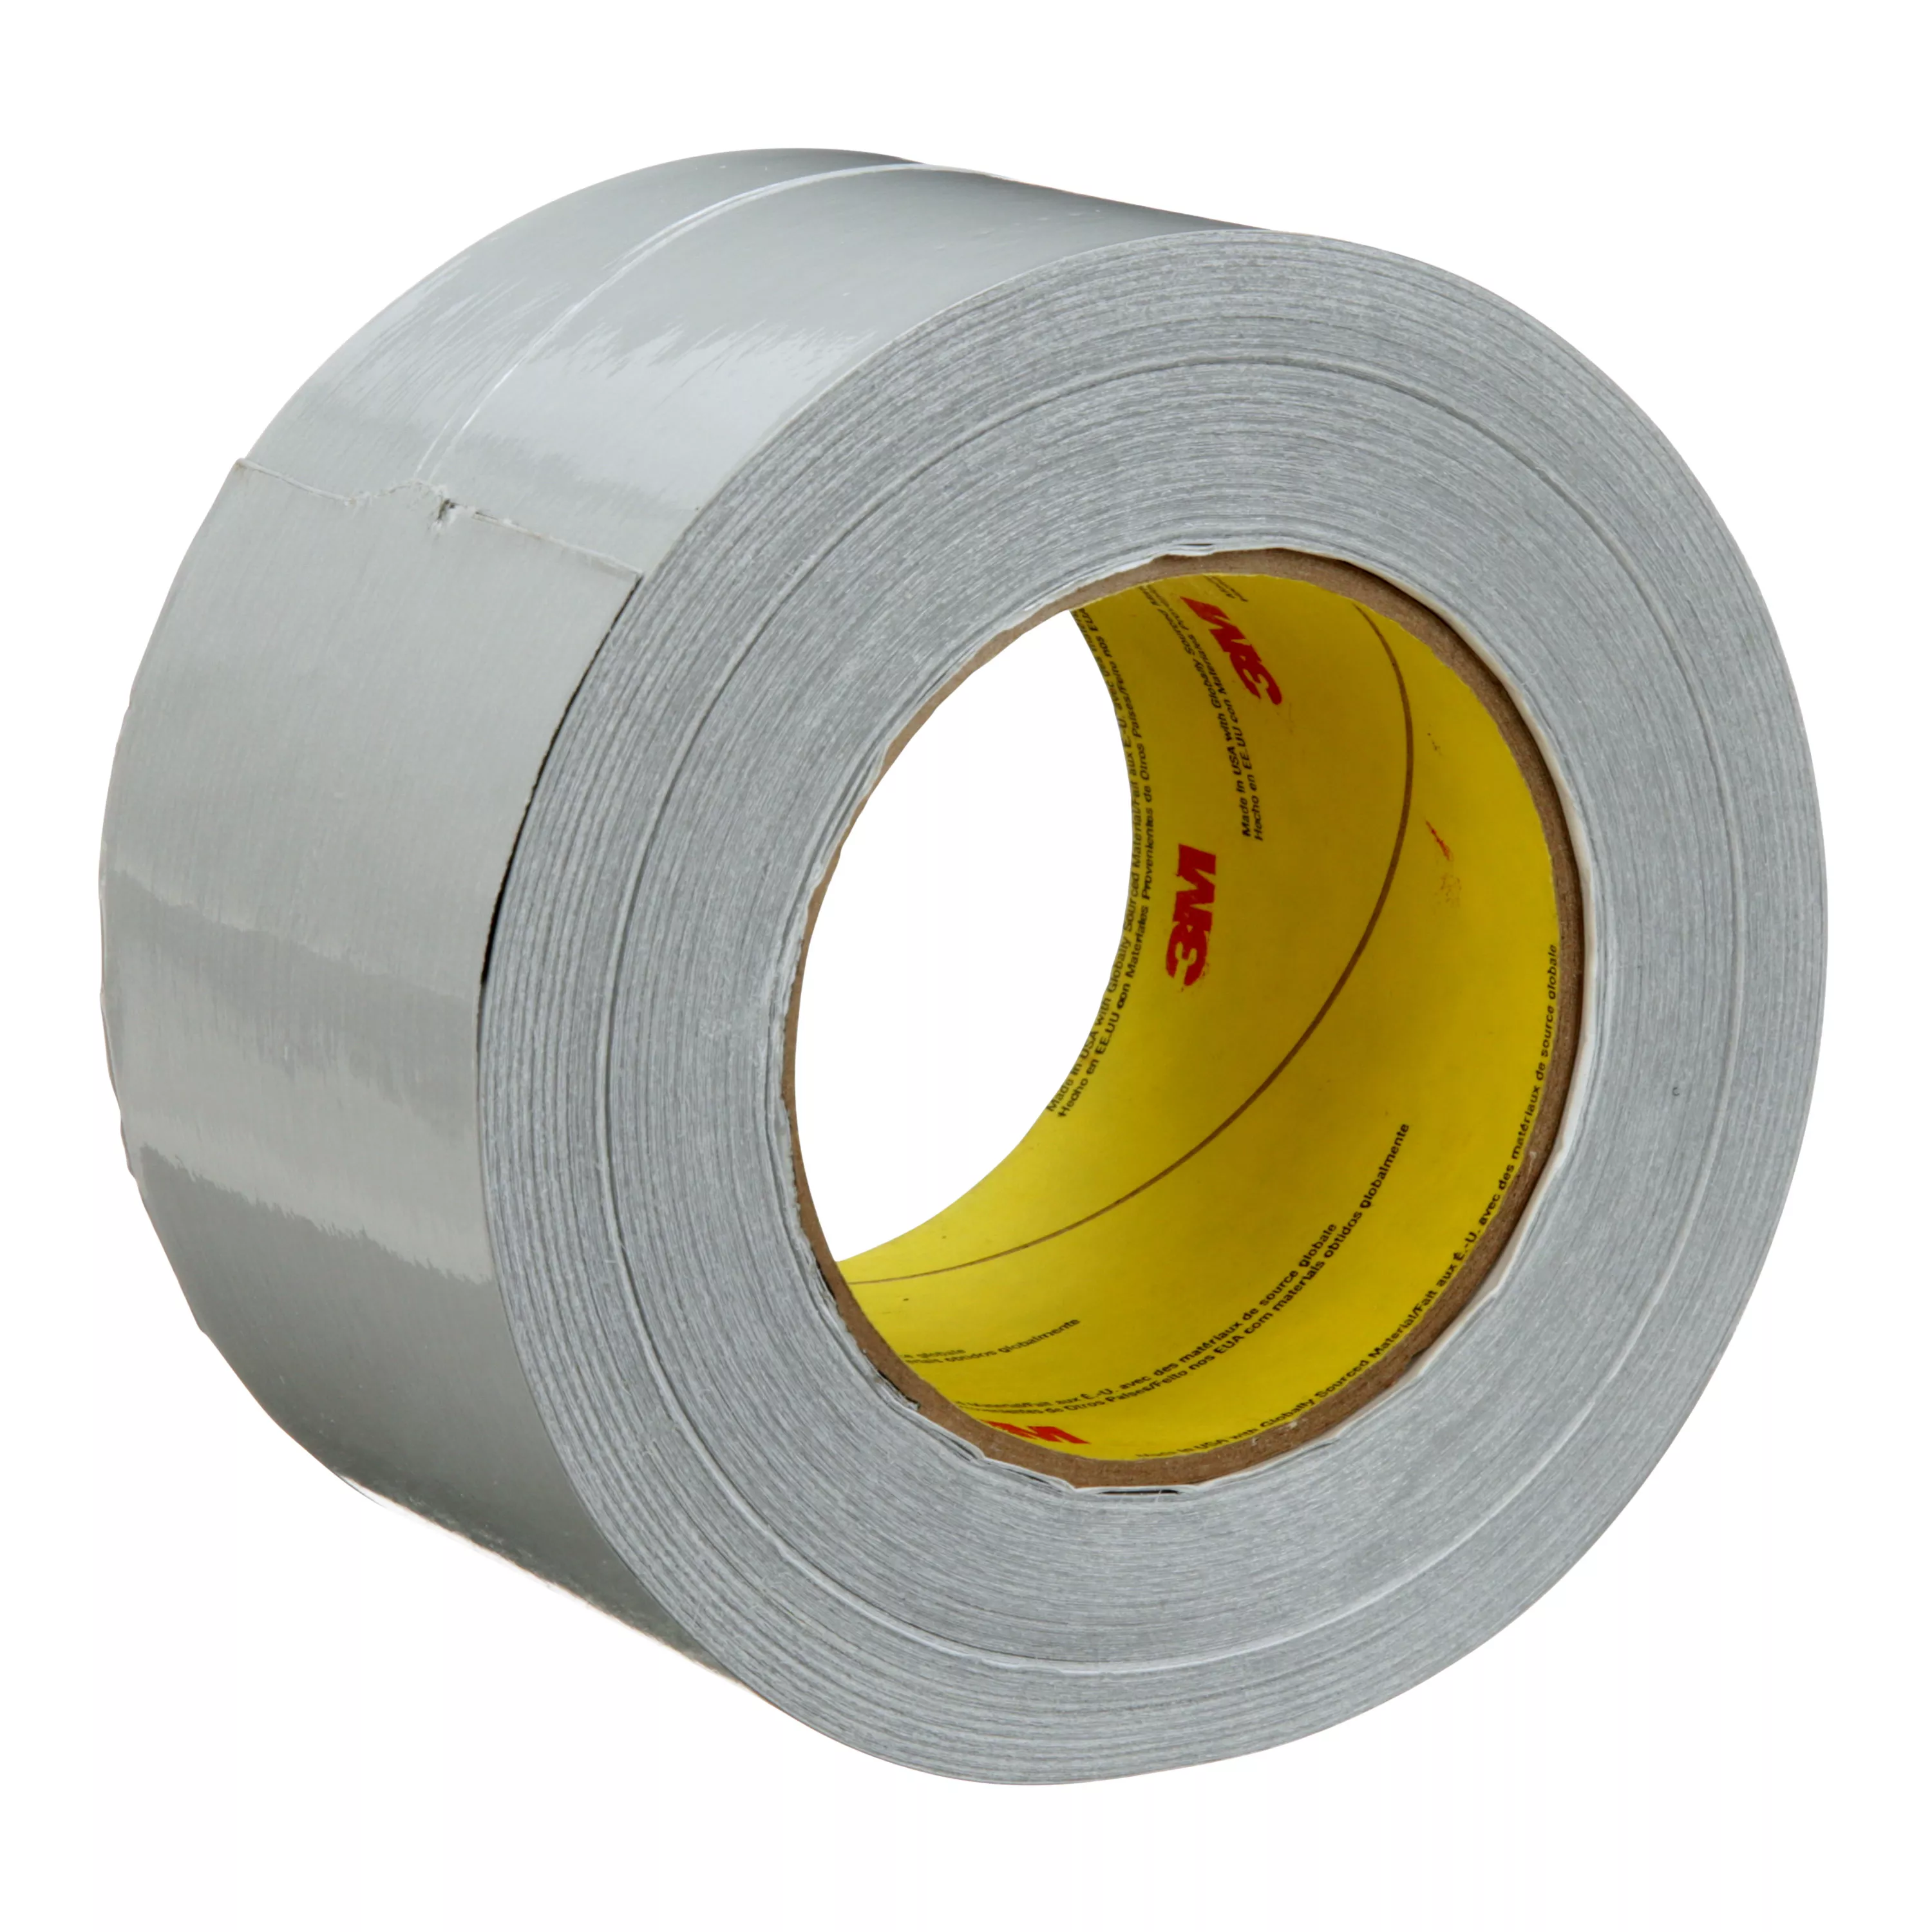 3M™ Venture Tape™ Cryogenic Vapor Barrier Tape 1555CW, Silver, 72 mm x
45.7 m, 16 Rolls/Case